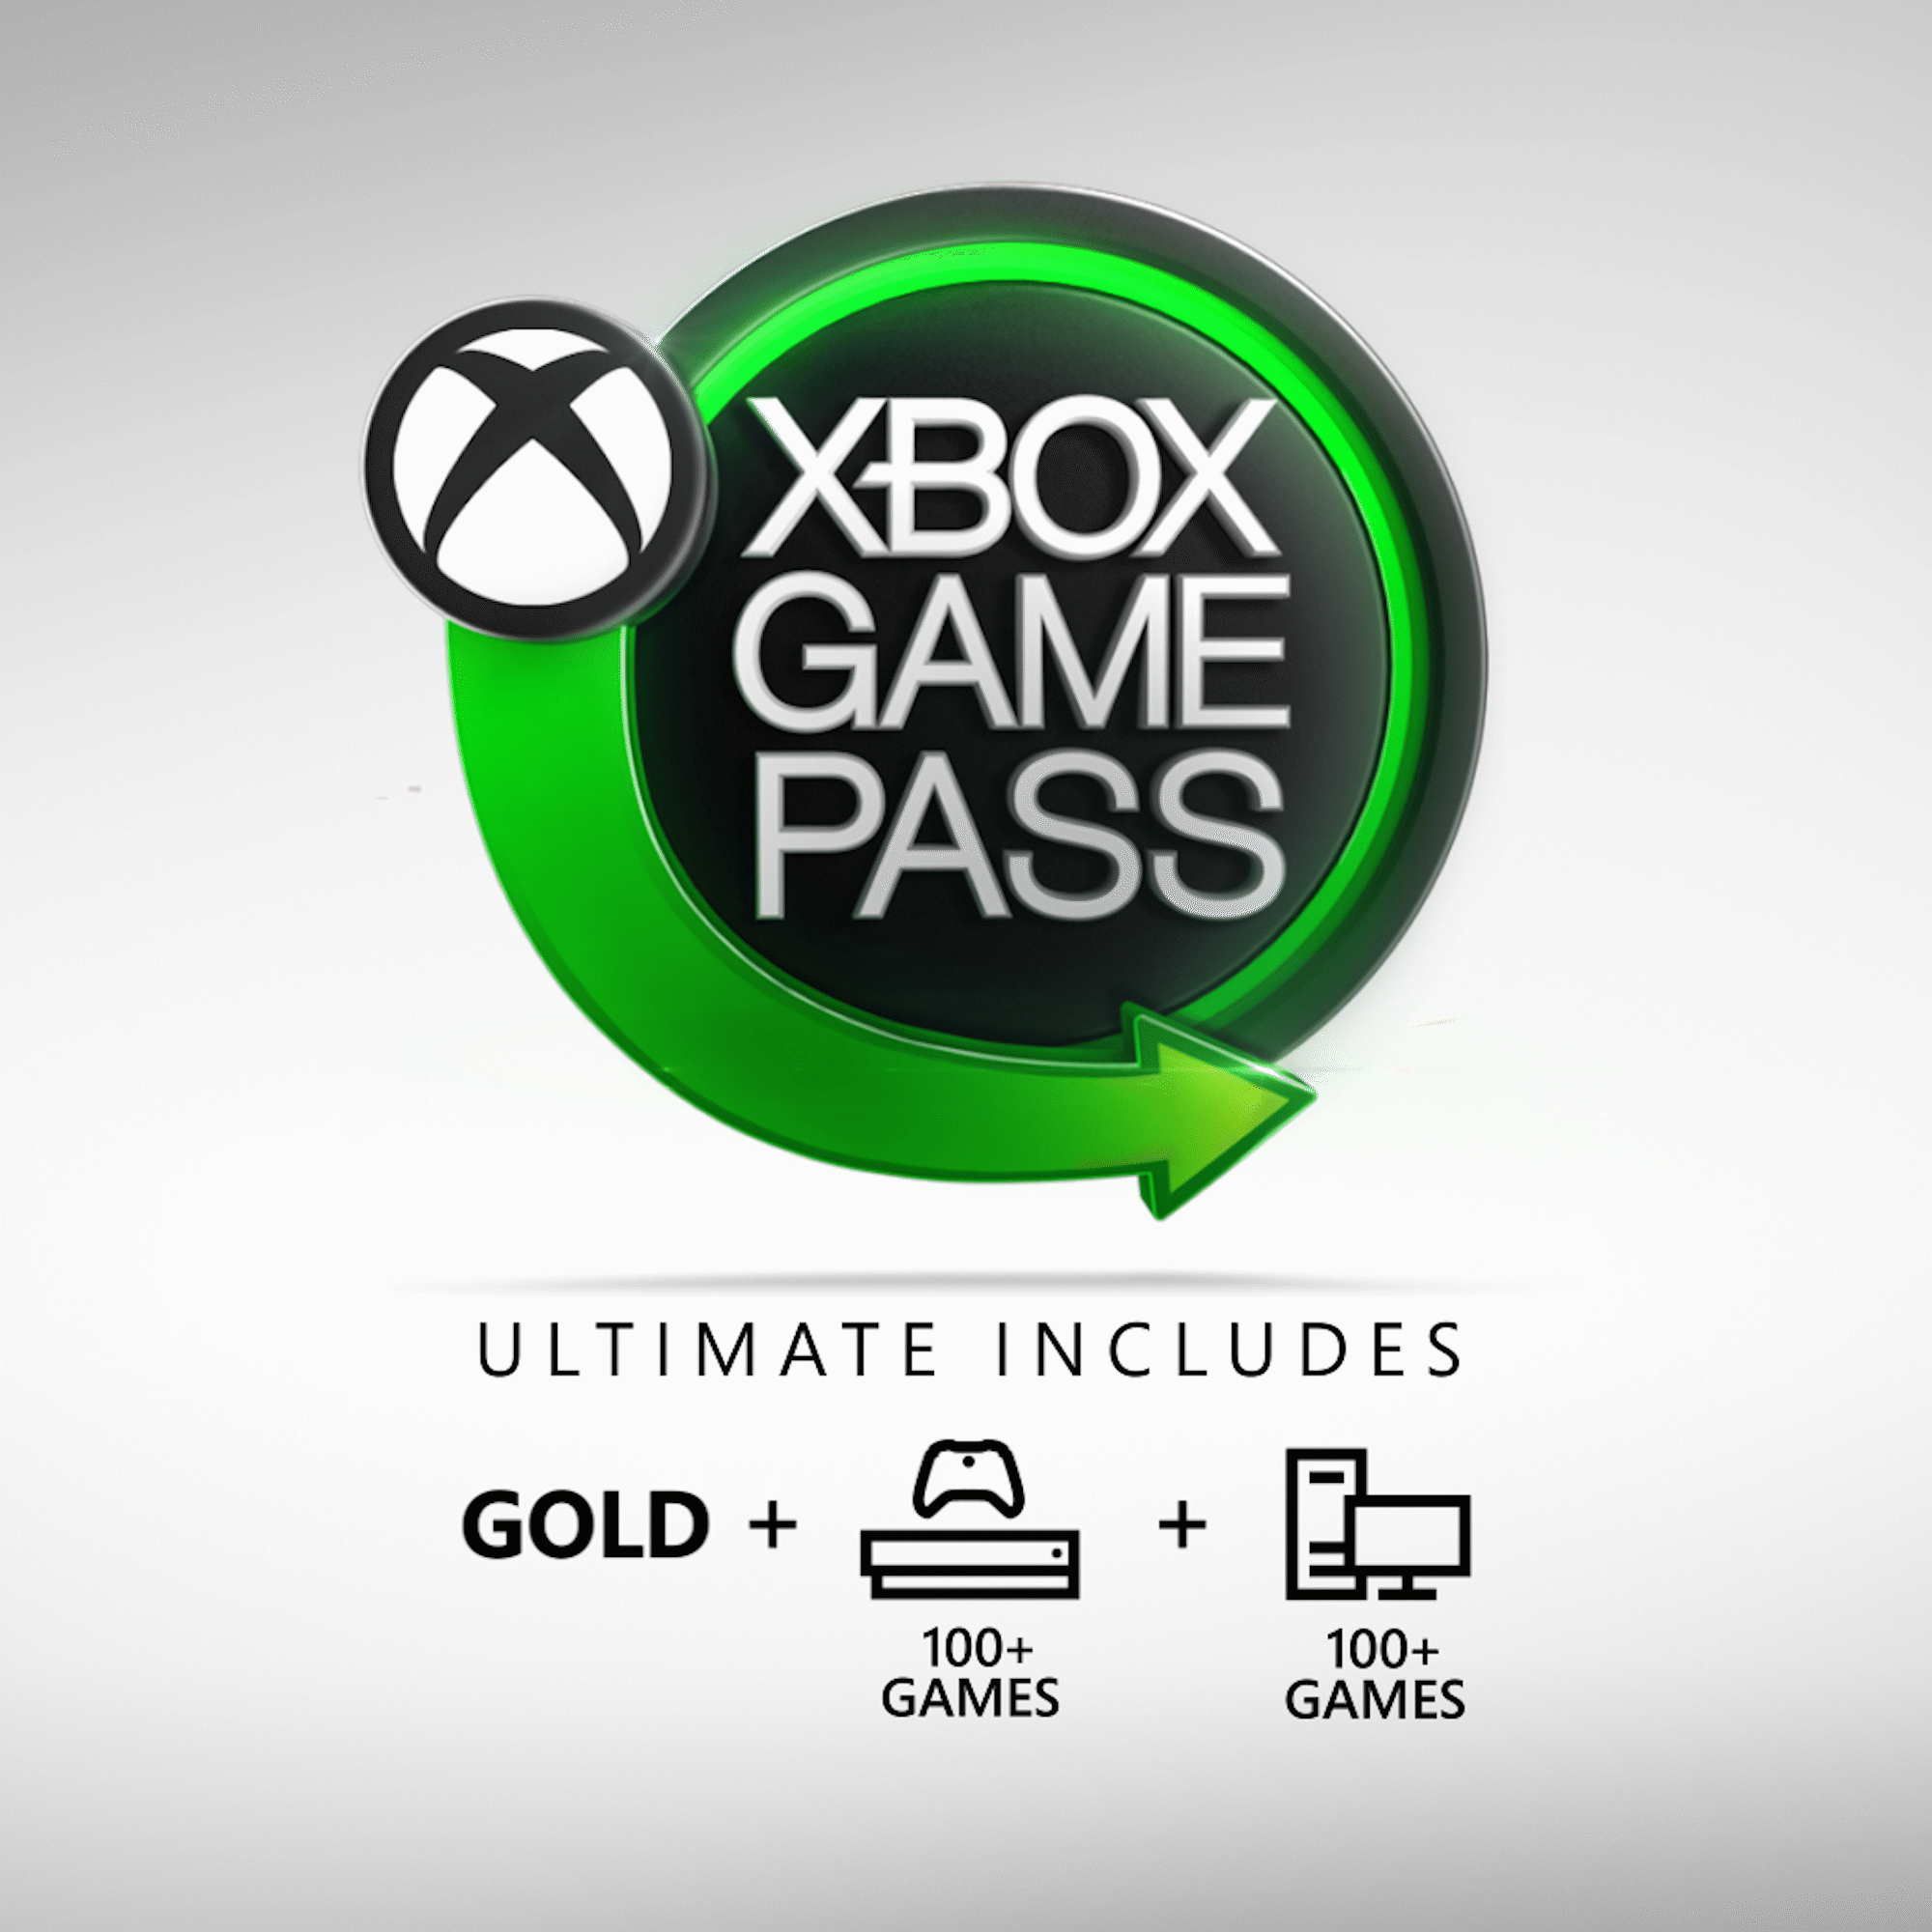 Xbox ultimate месяц купить. Xbox game Pass Ultimate 1 месяц. Ультимейт пасс Xbox 12 месяцев. Xbox game Pass Ultimate 2 месяца. Xbox game Pass Ultimate.